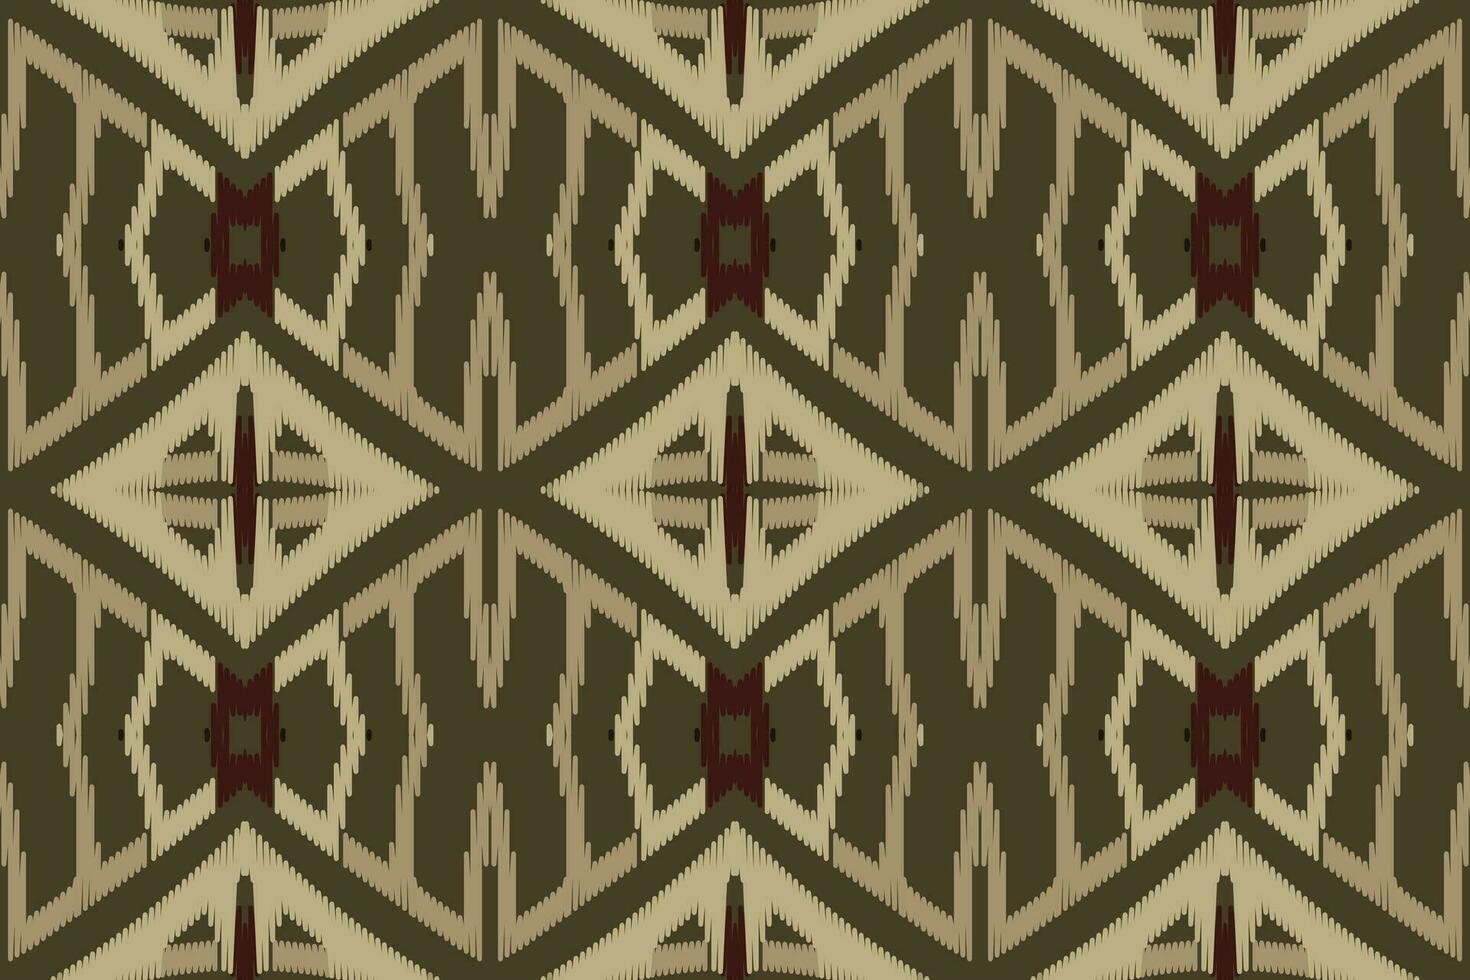 ikat tyg paisley broderi bakgrund. ikat design geometrisk etnisk orientalisk mönster traditionell.aztec stil abstrakt vektor illustration.design för textur, tyg, kläder, inslagning, sarong.